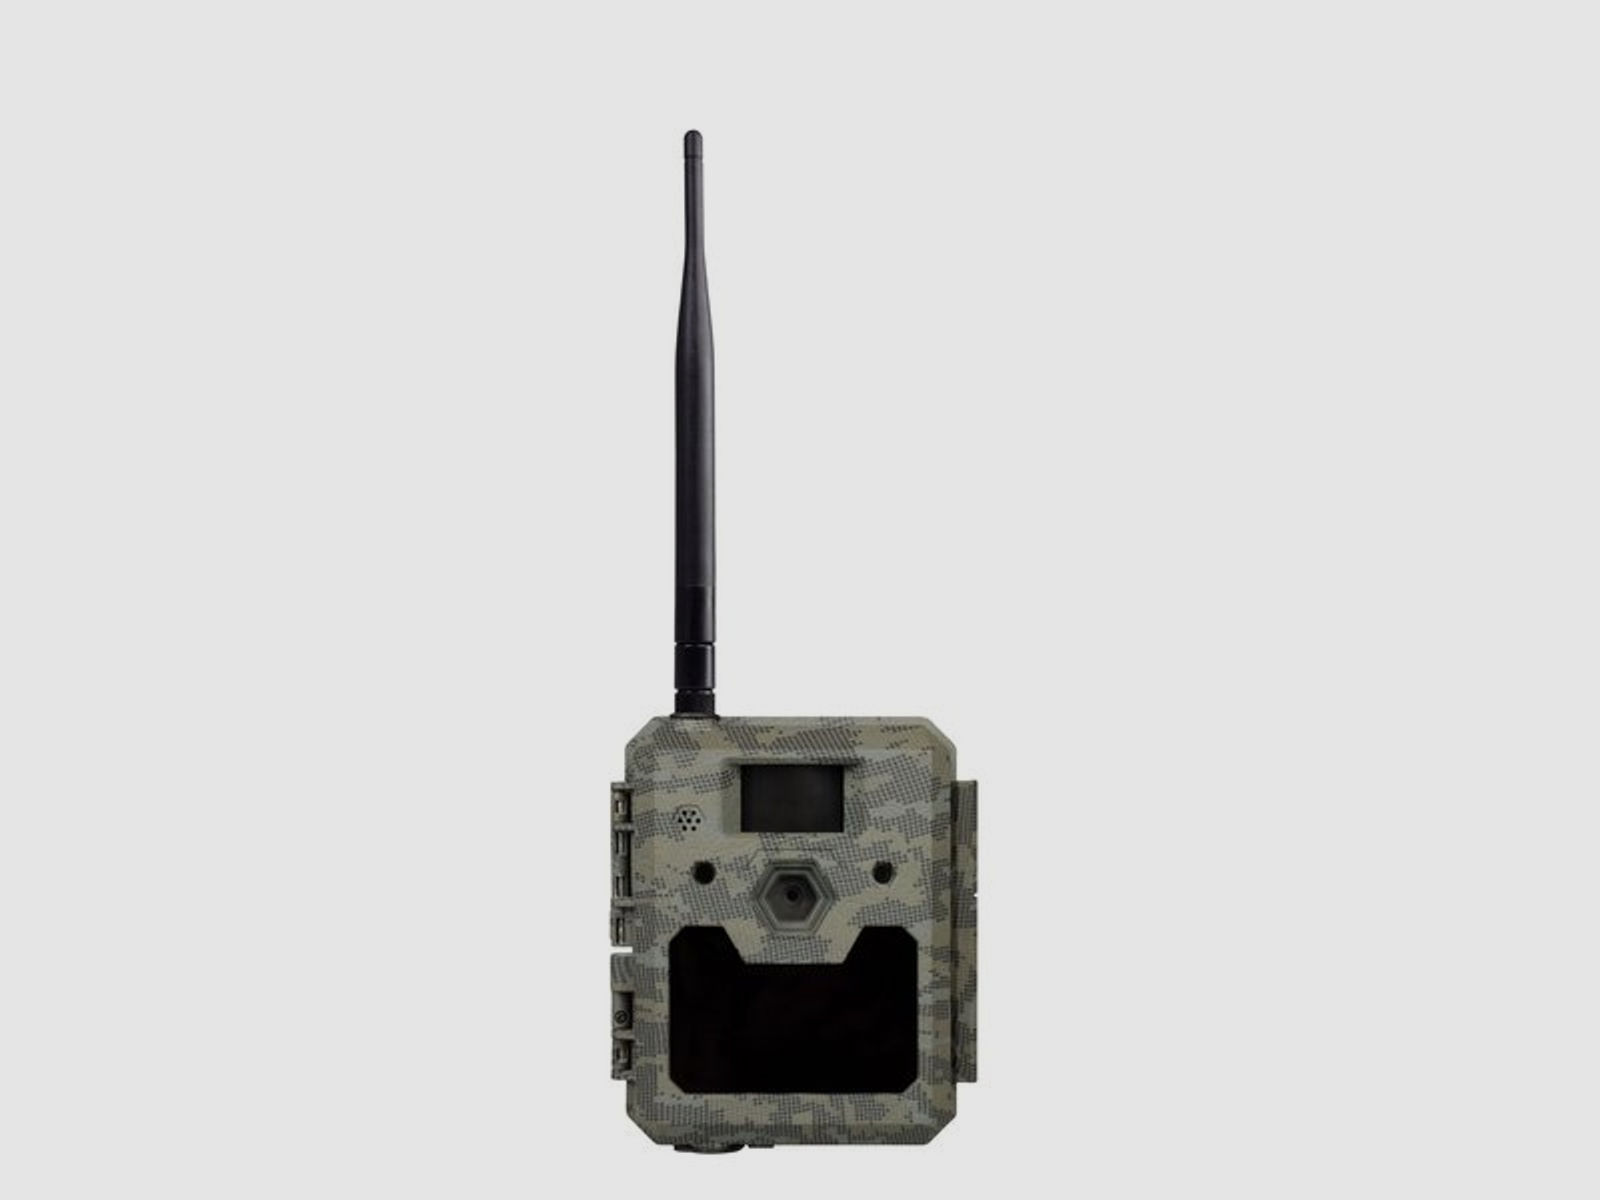 ICUserver CLOM Cam5 Wildkamera | Neuware | Sofort verfügbar | Schneller Versand | Heidejagd